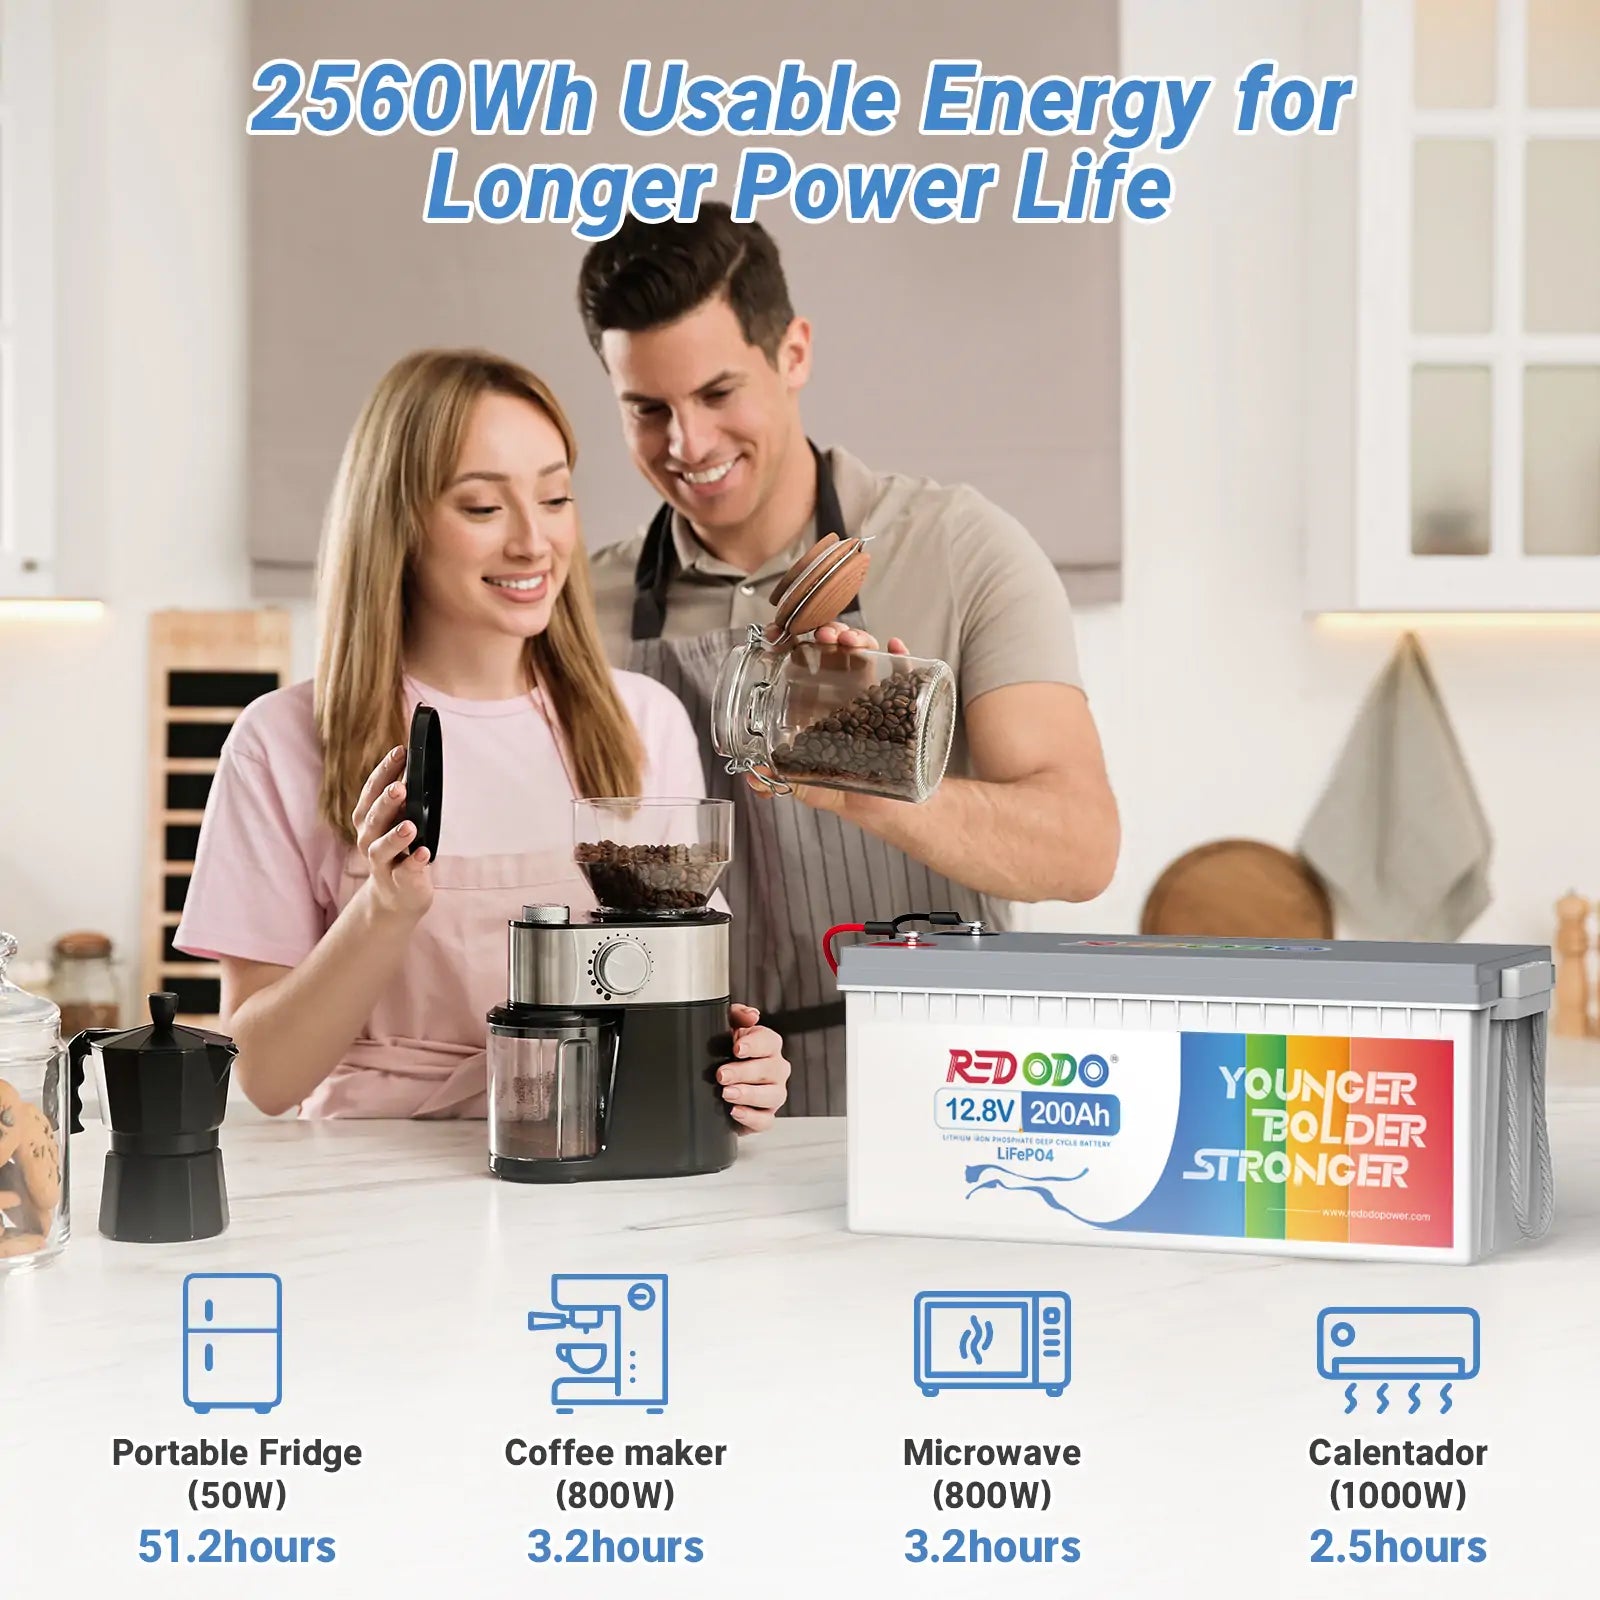 high energy 2560Wh usable energy for longer power life